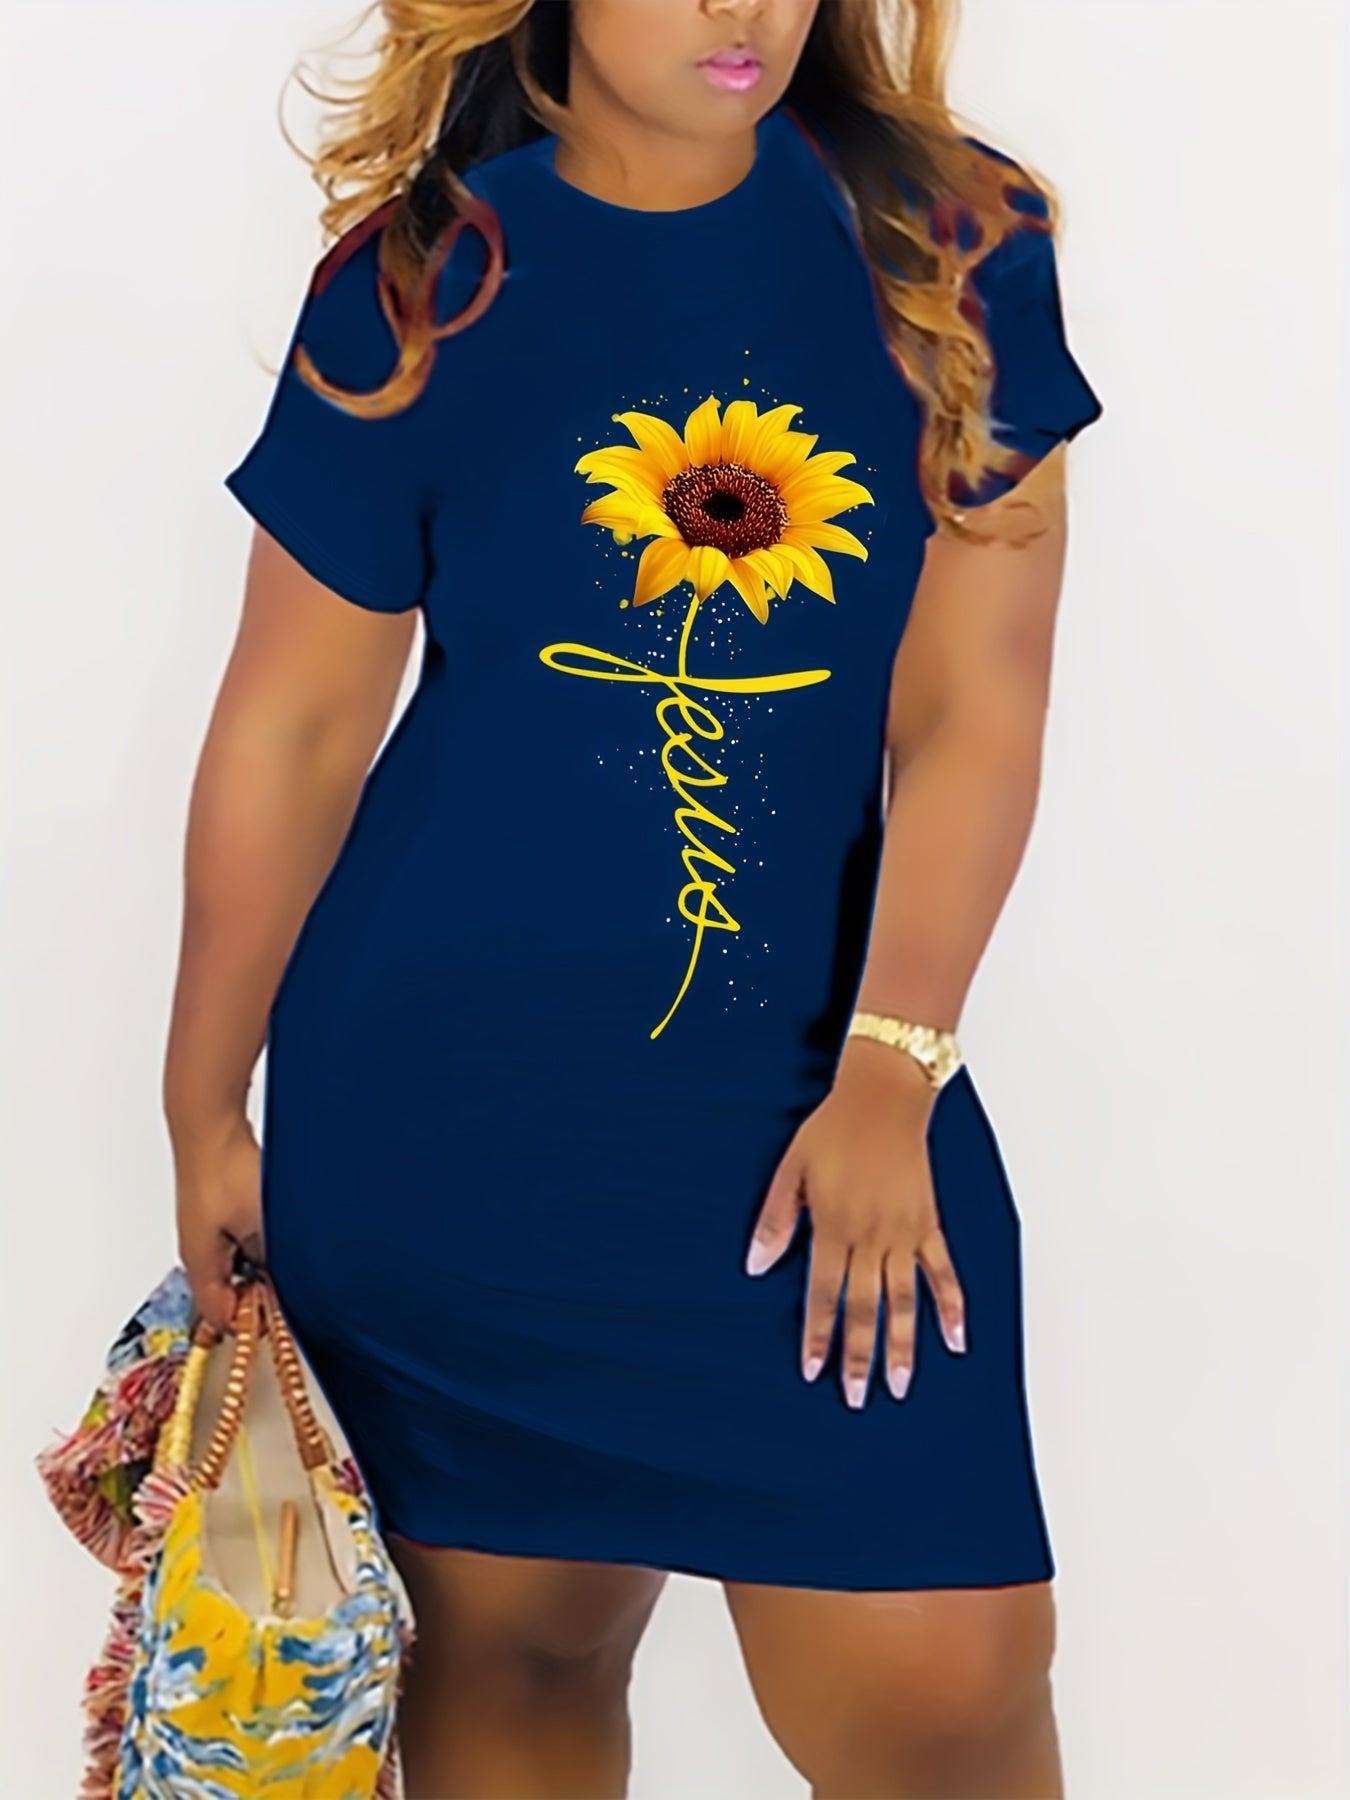 Jesus (sunflower) Plus Size Women's Christian Casual Dress claimedbygoddesigns